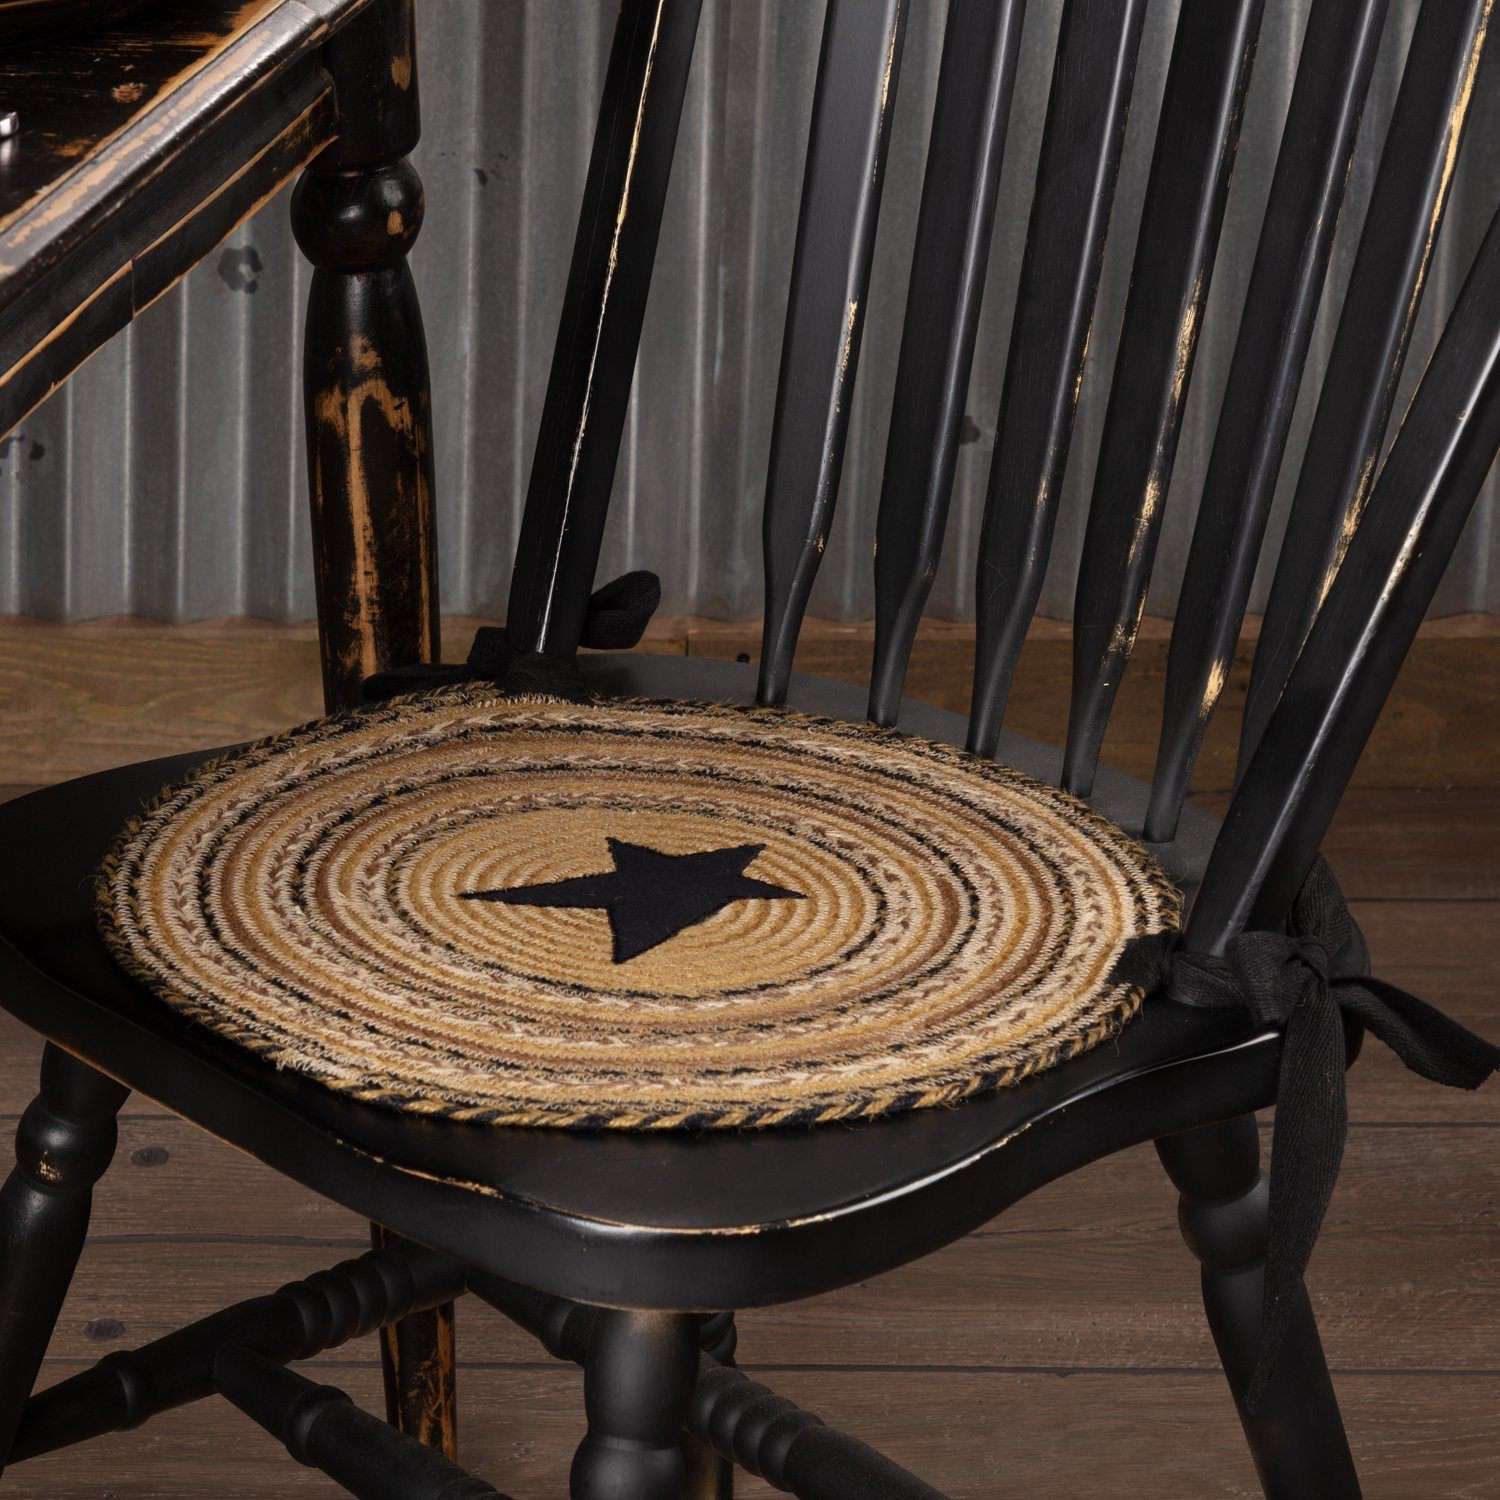 Kettle Grove Jute Braided Chair Pad Applique Star Set of 6 Natural, Black, Caramel Chair Pad VHC Brands 